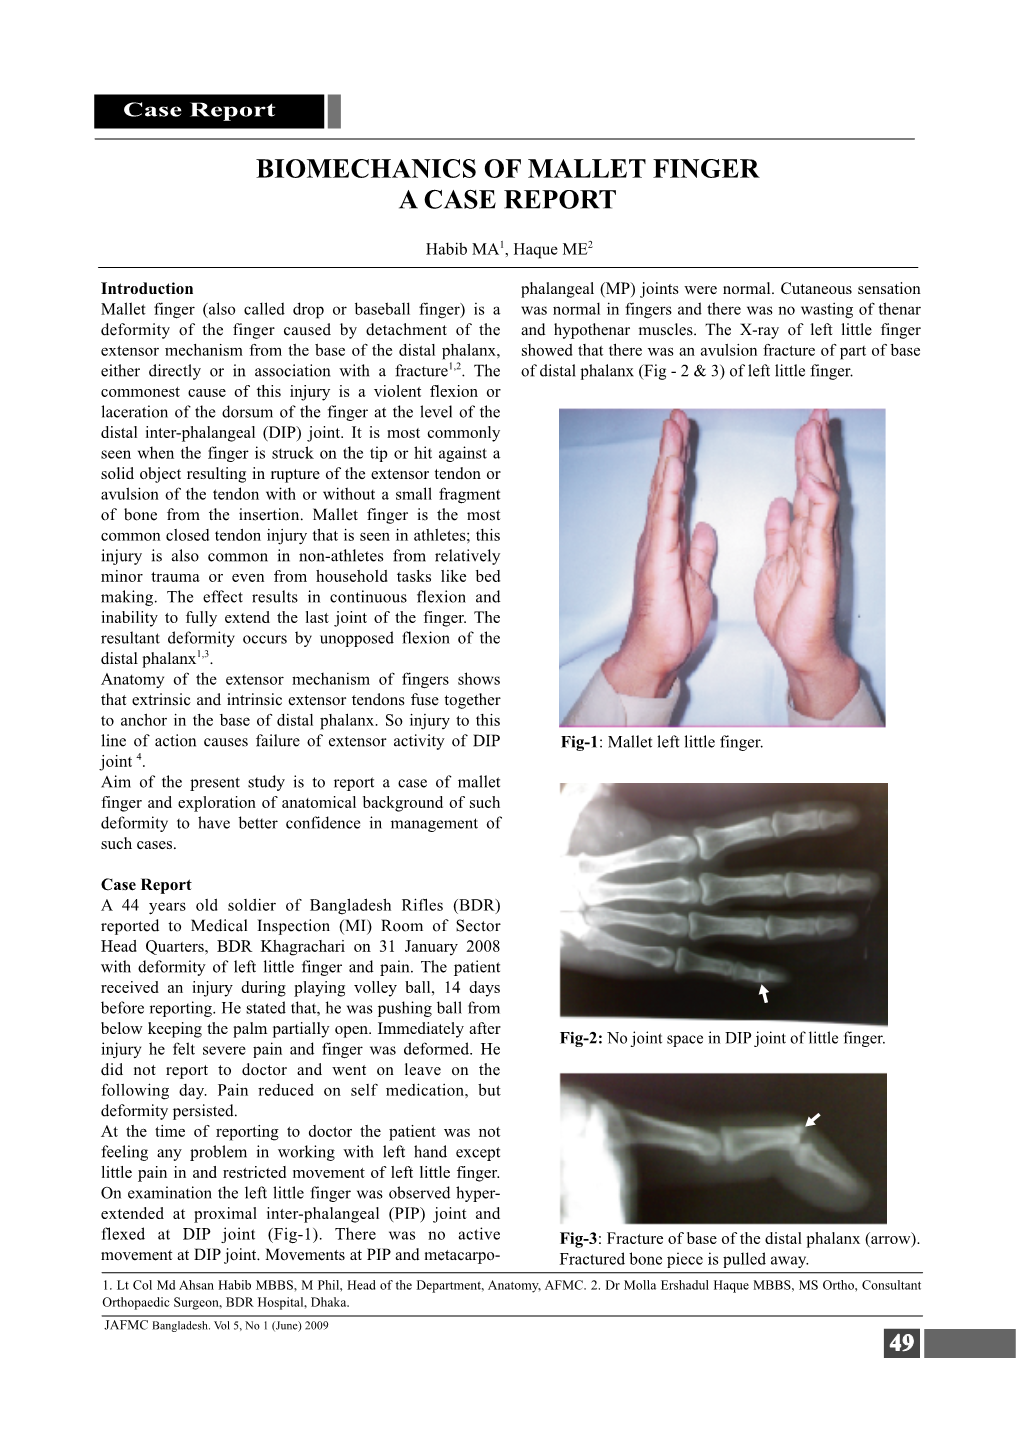 Biomechanics of Mallet Finger a Case Report